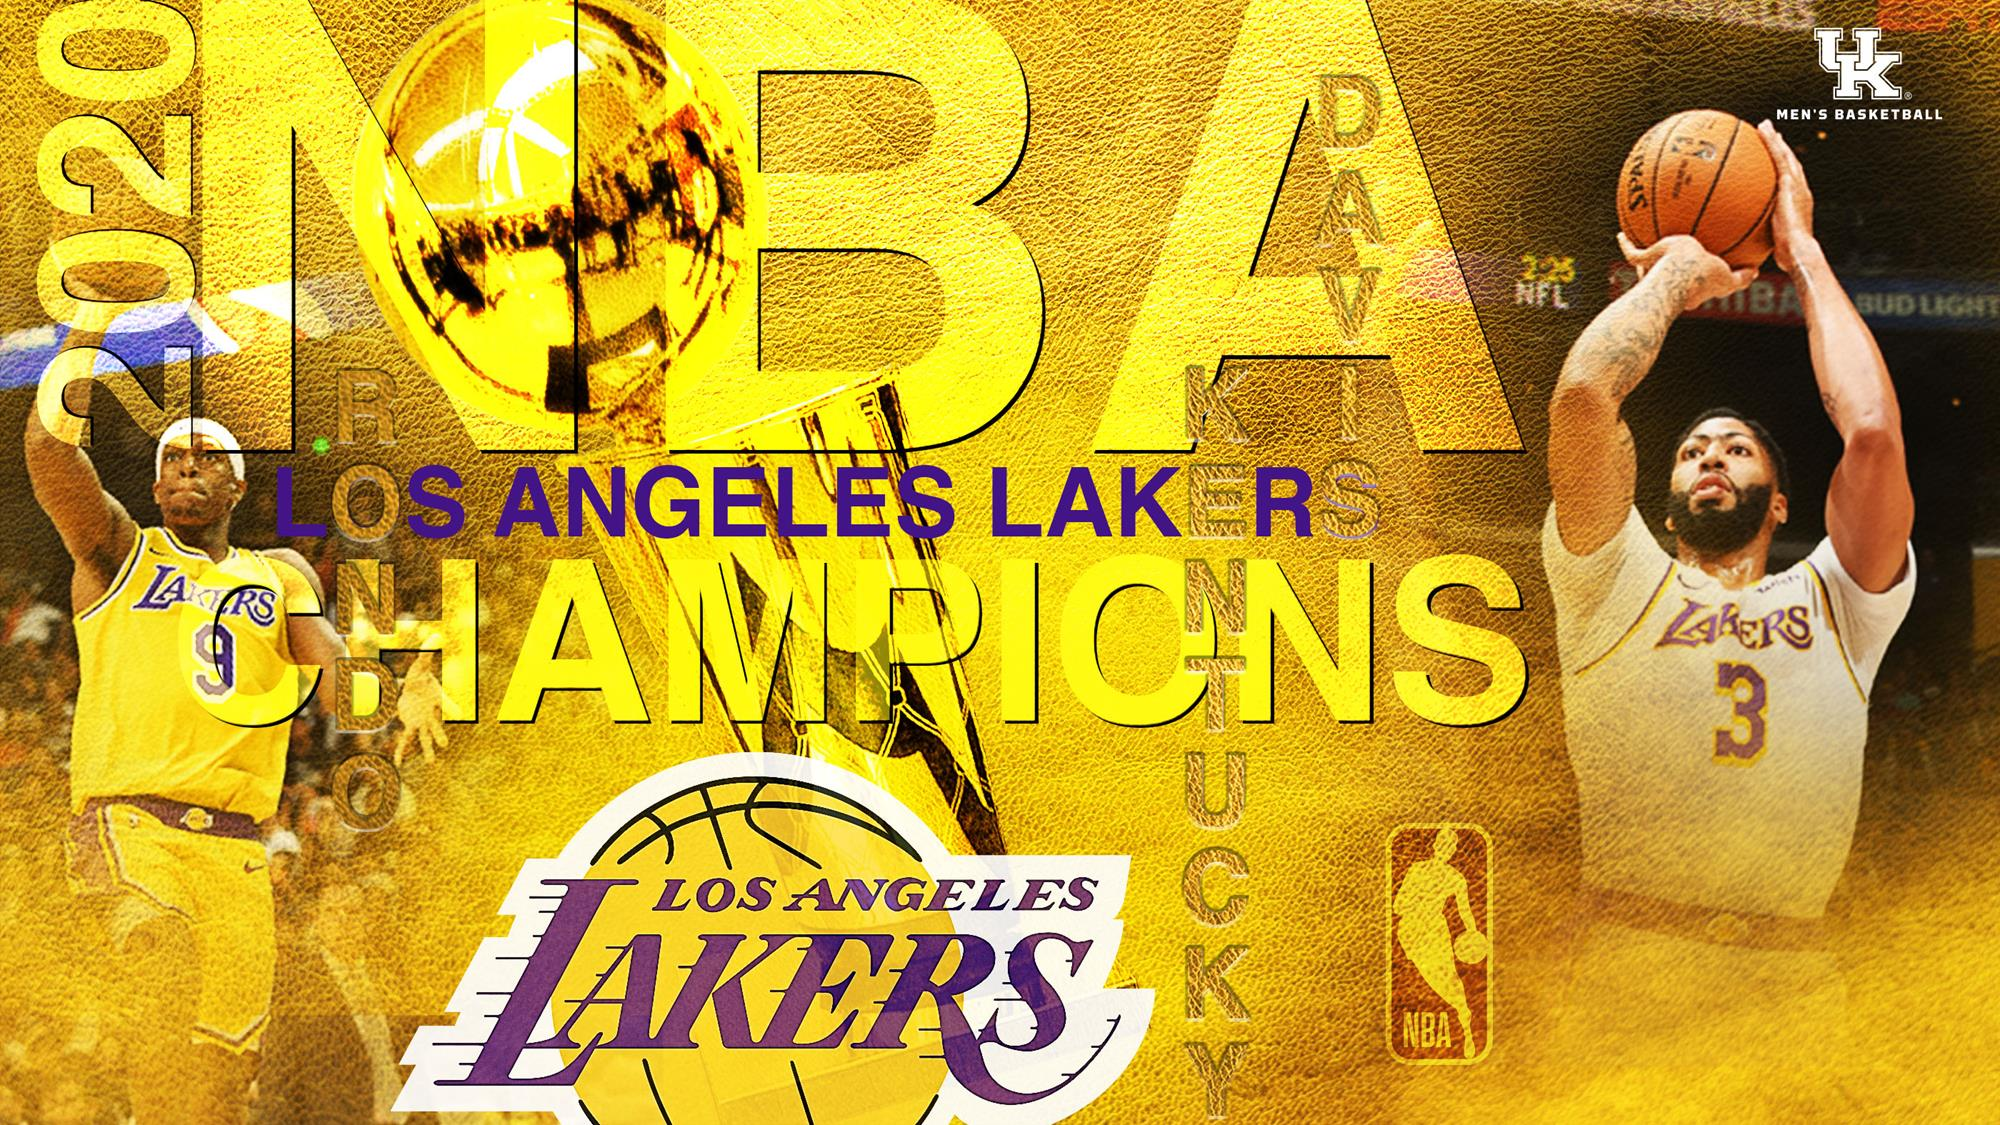 UK Men’s Basketball Trio Lead LA Lakers to NBA Championship